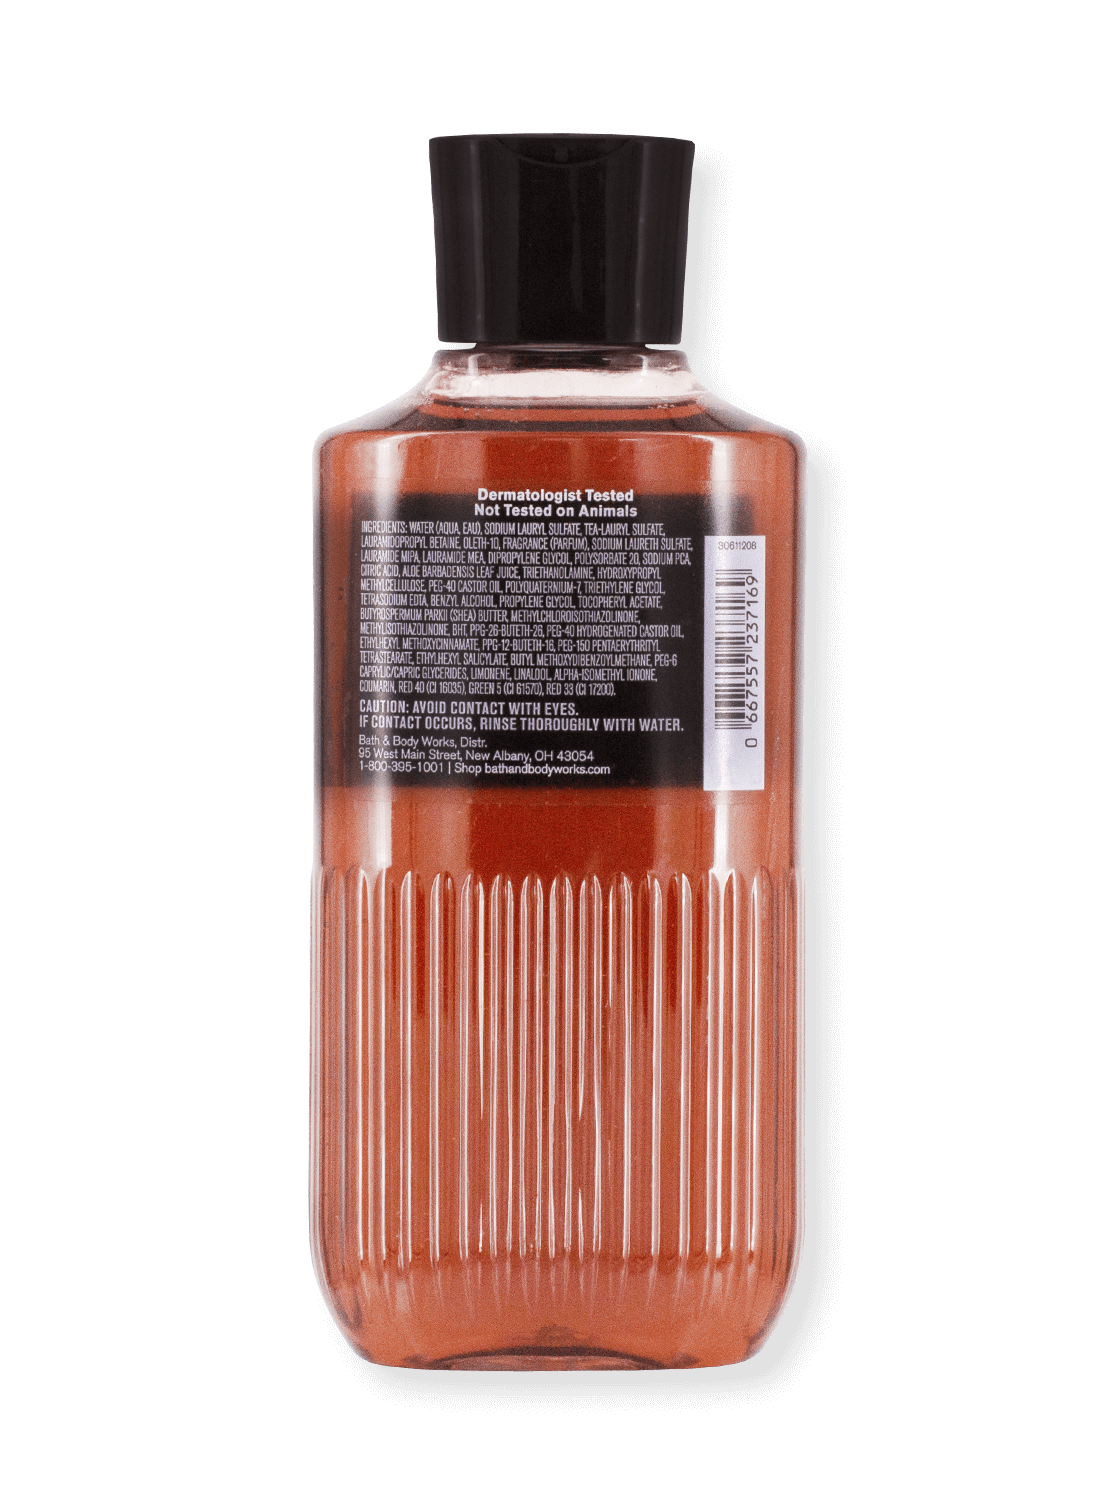 3in1 - Hair - Face & Body Wash - Bourbon - For Men - 295ml